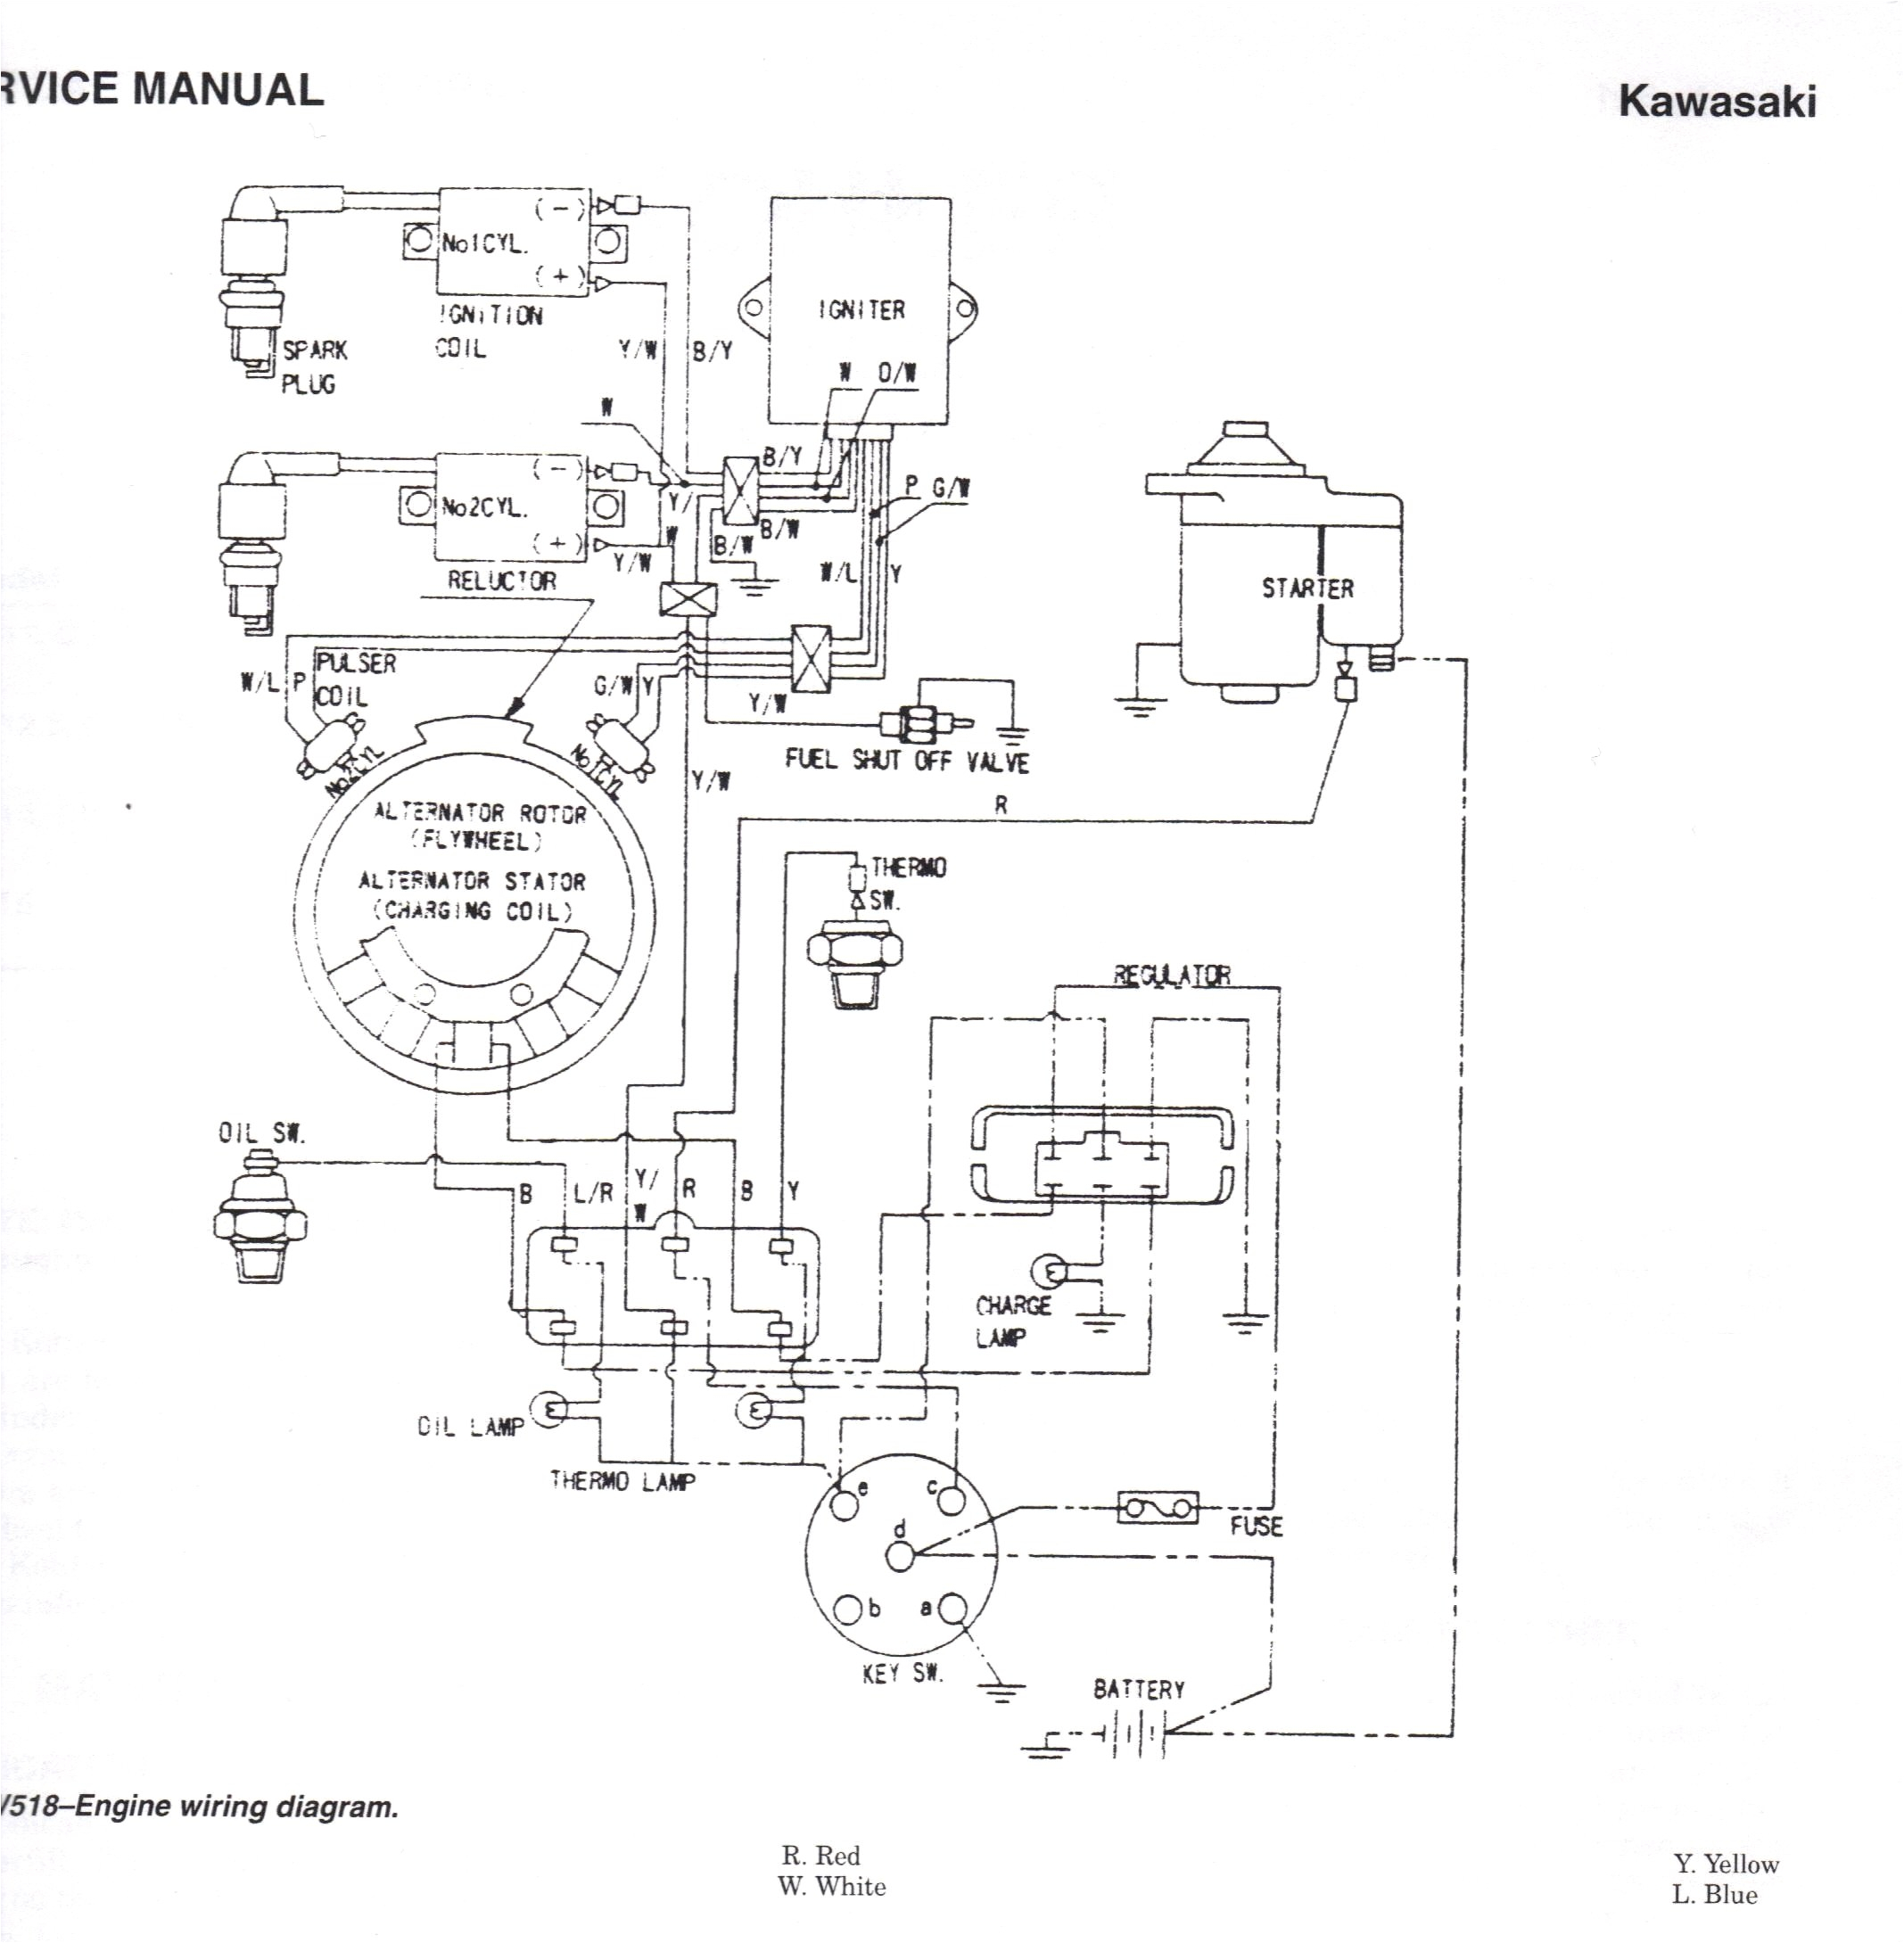 2005 john deere model 5103 wiring diagram wiring diagram blog john deere 5103 ignition switch diagram